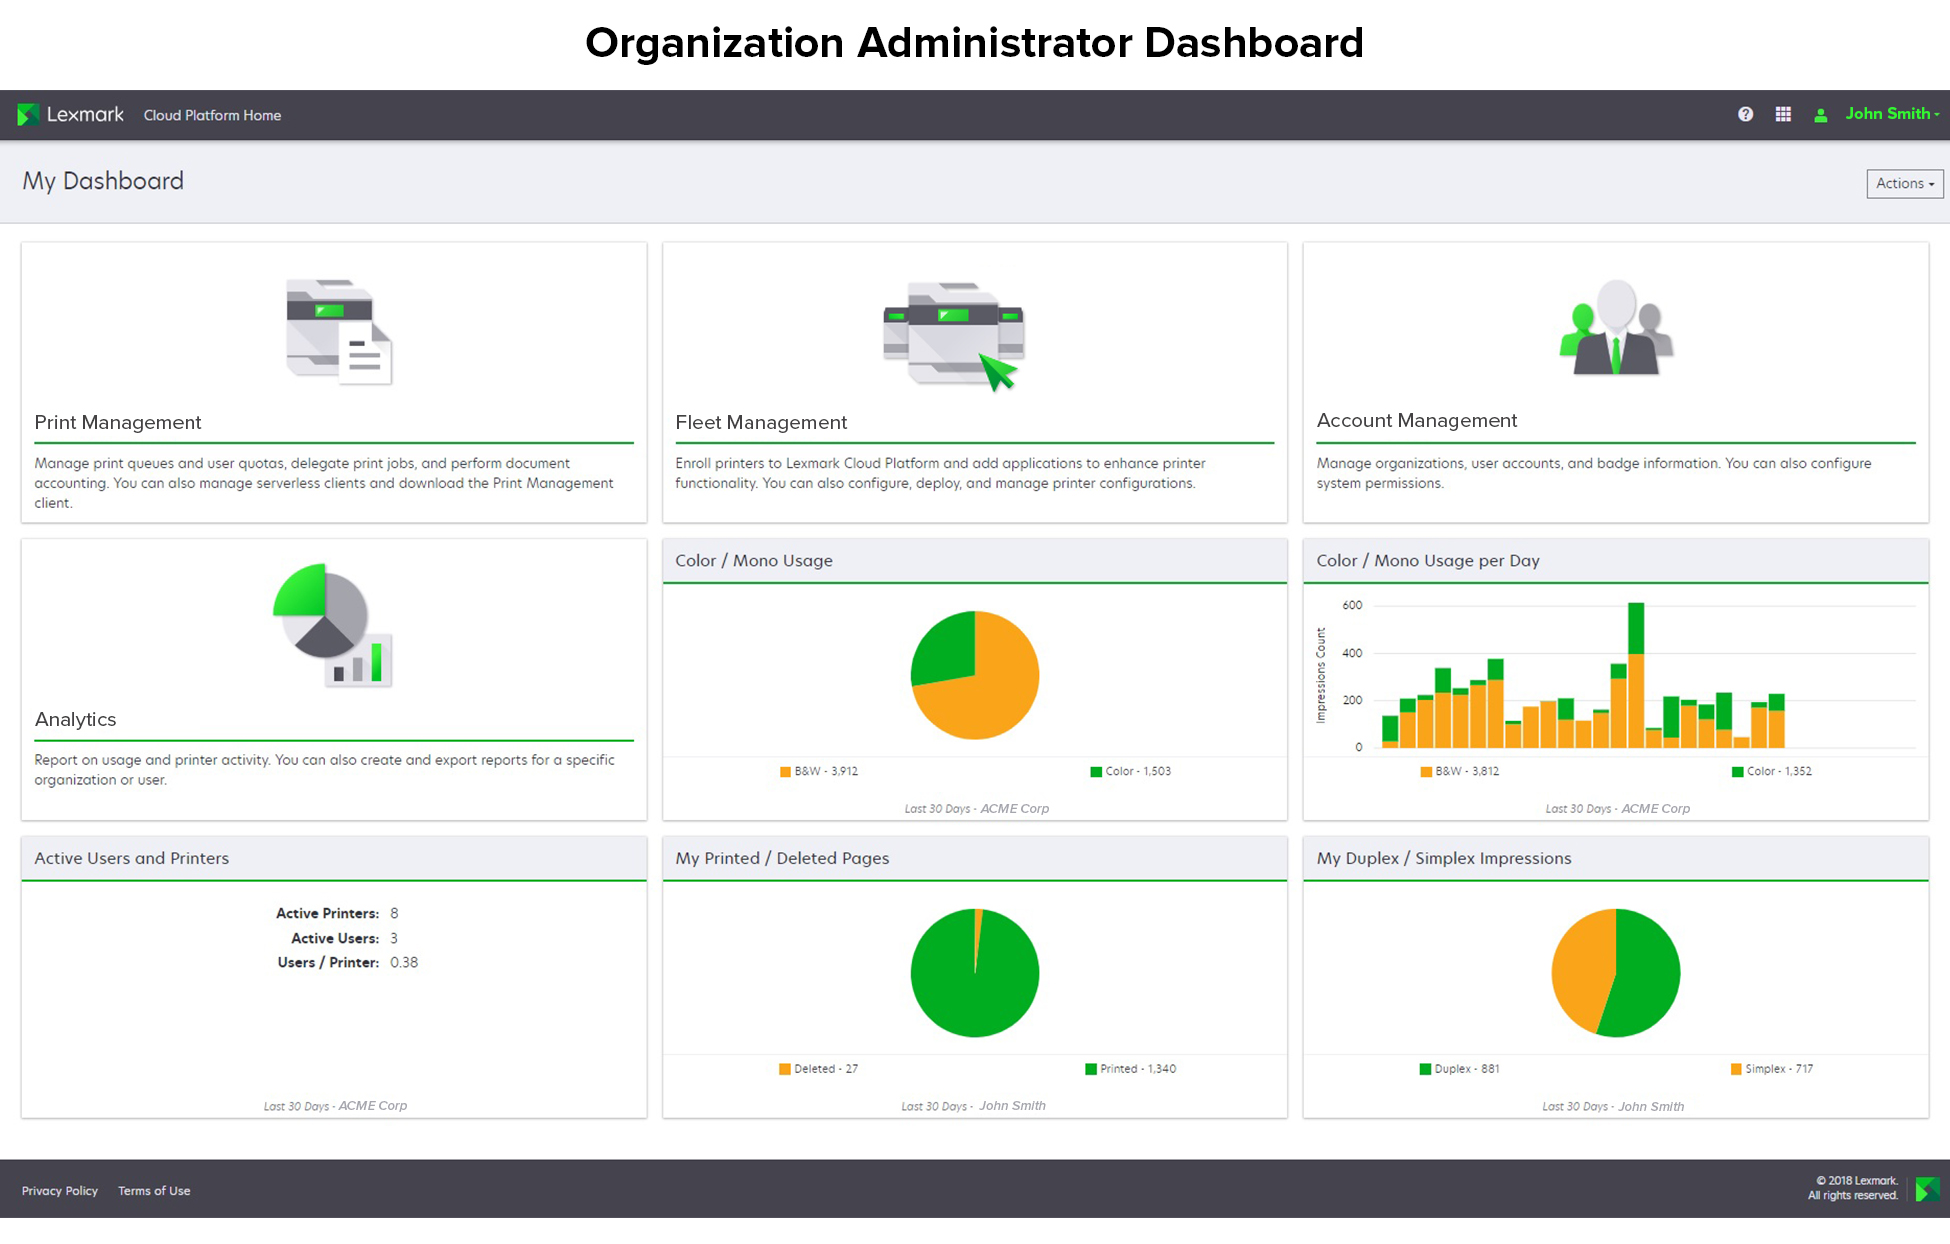 A screenshot showing the organization administrator dashboard.